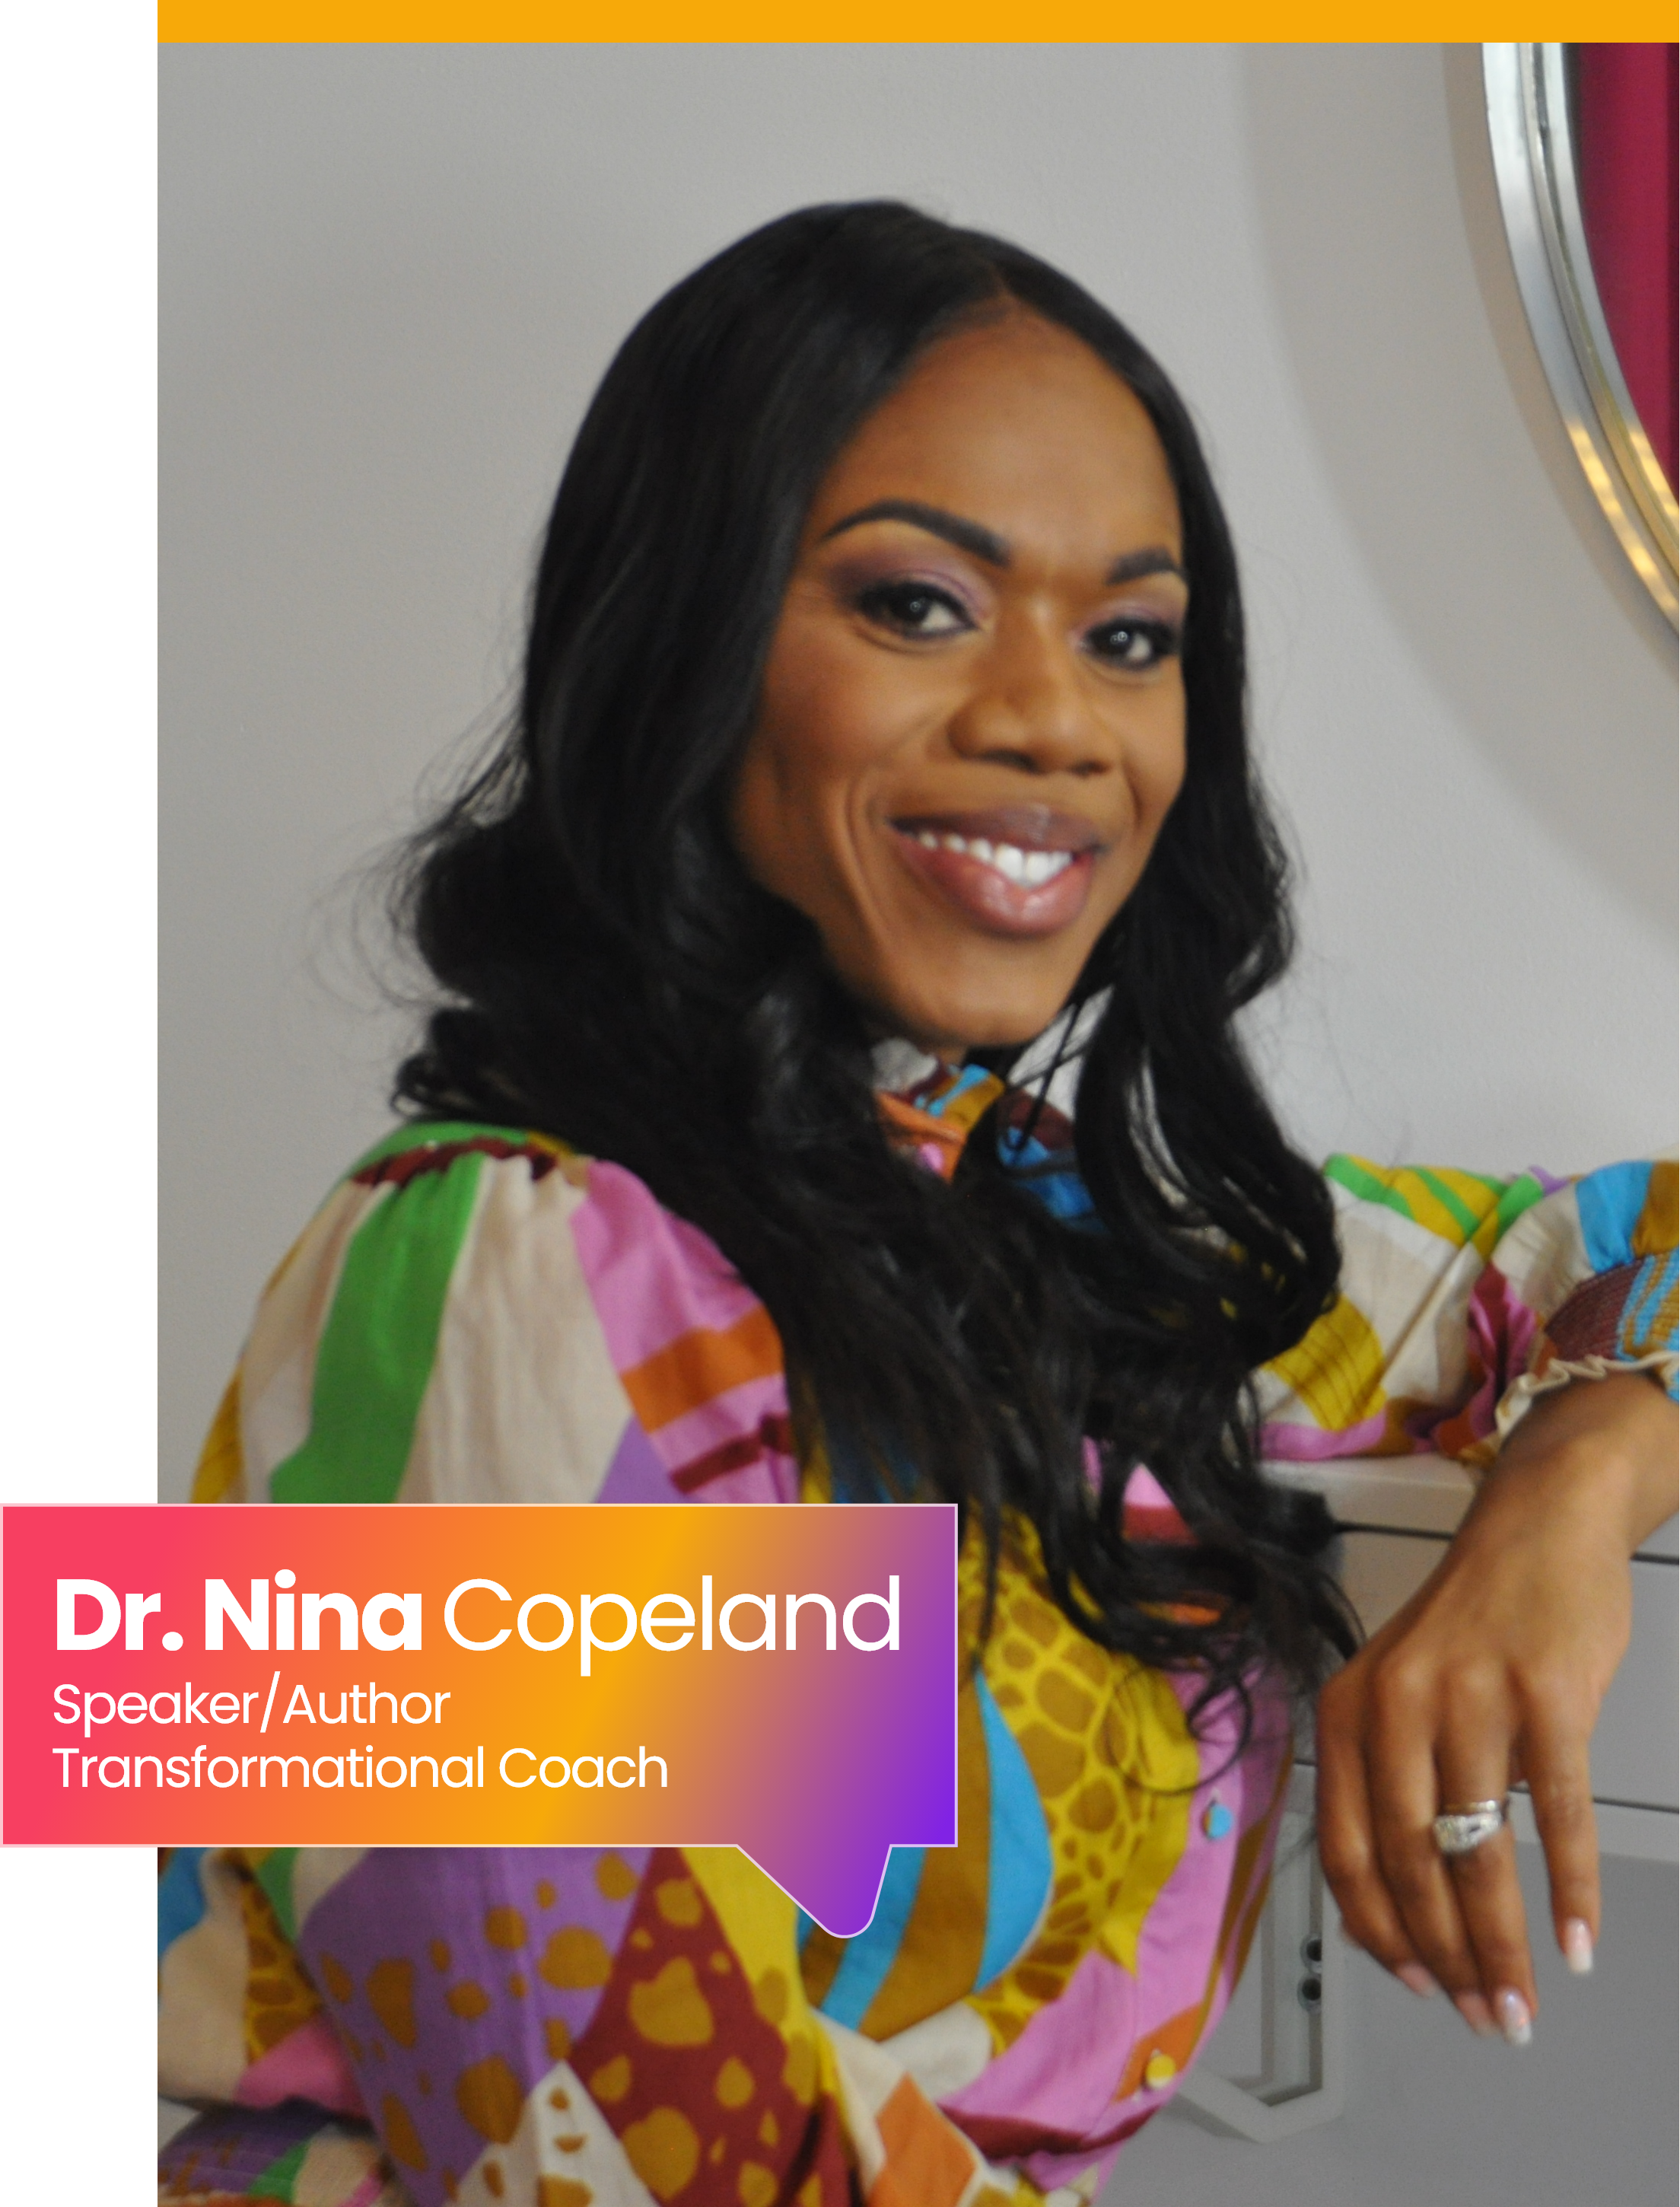 Dr. Nina Copeland